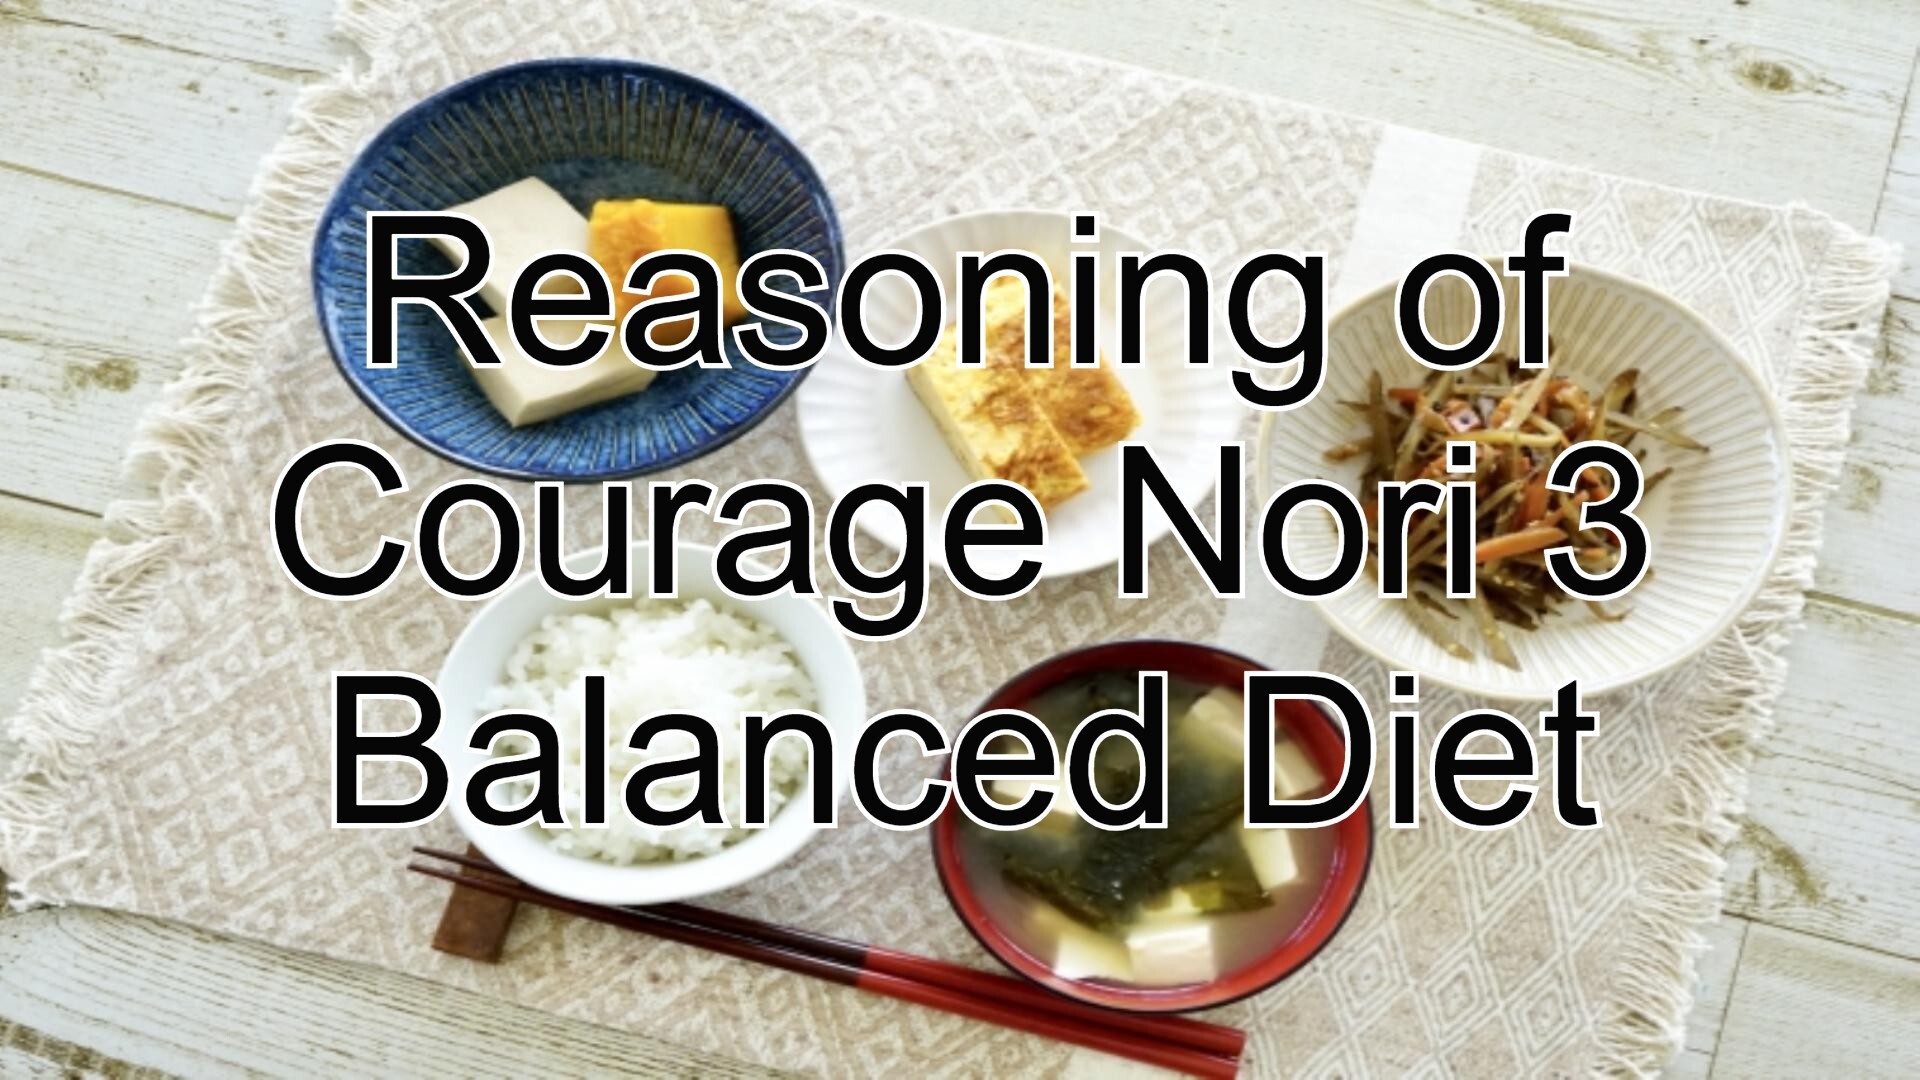 Reasoning of Courage Nori 3 Balanced Diet